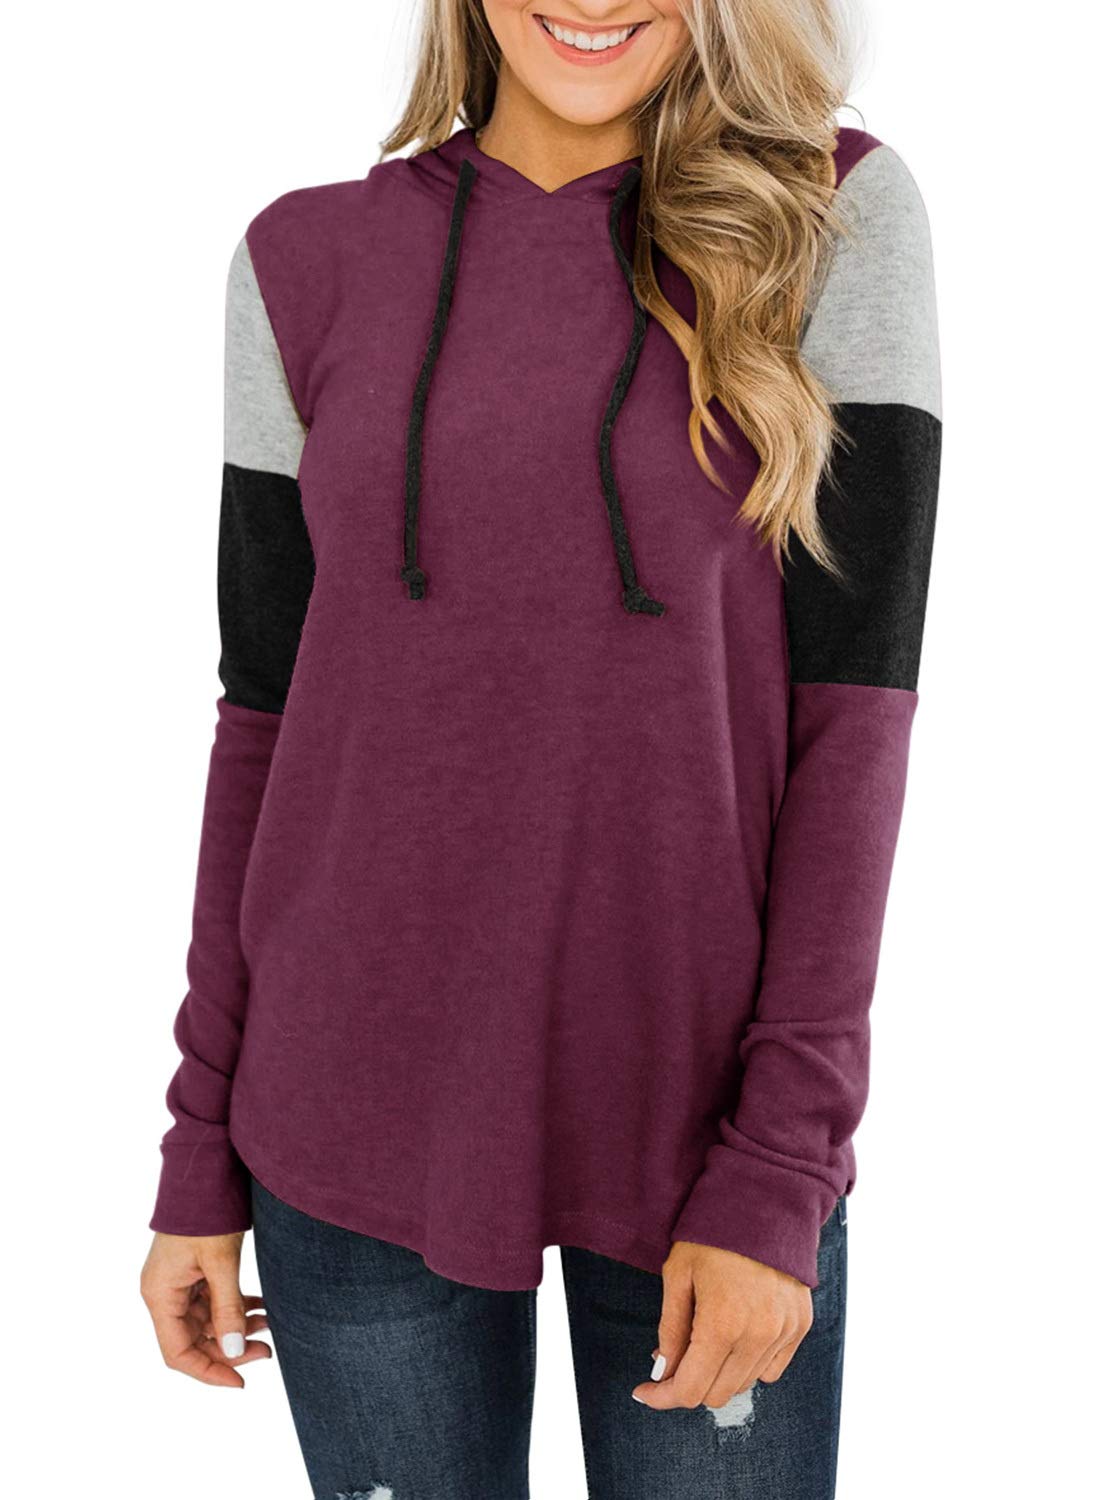 REORIA Womens Color Block Hoodie Sweatshirts Tunic Pullover Tops Long Sleeve Drawstring Shirts